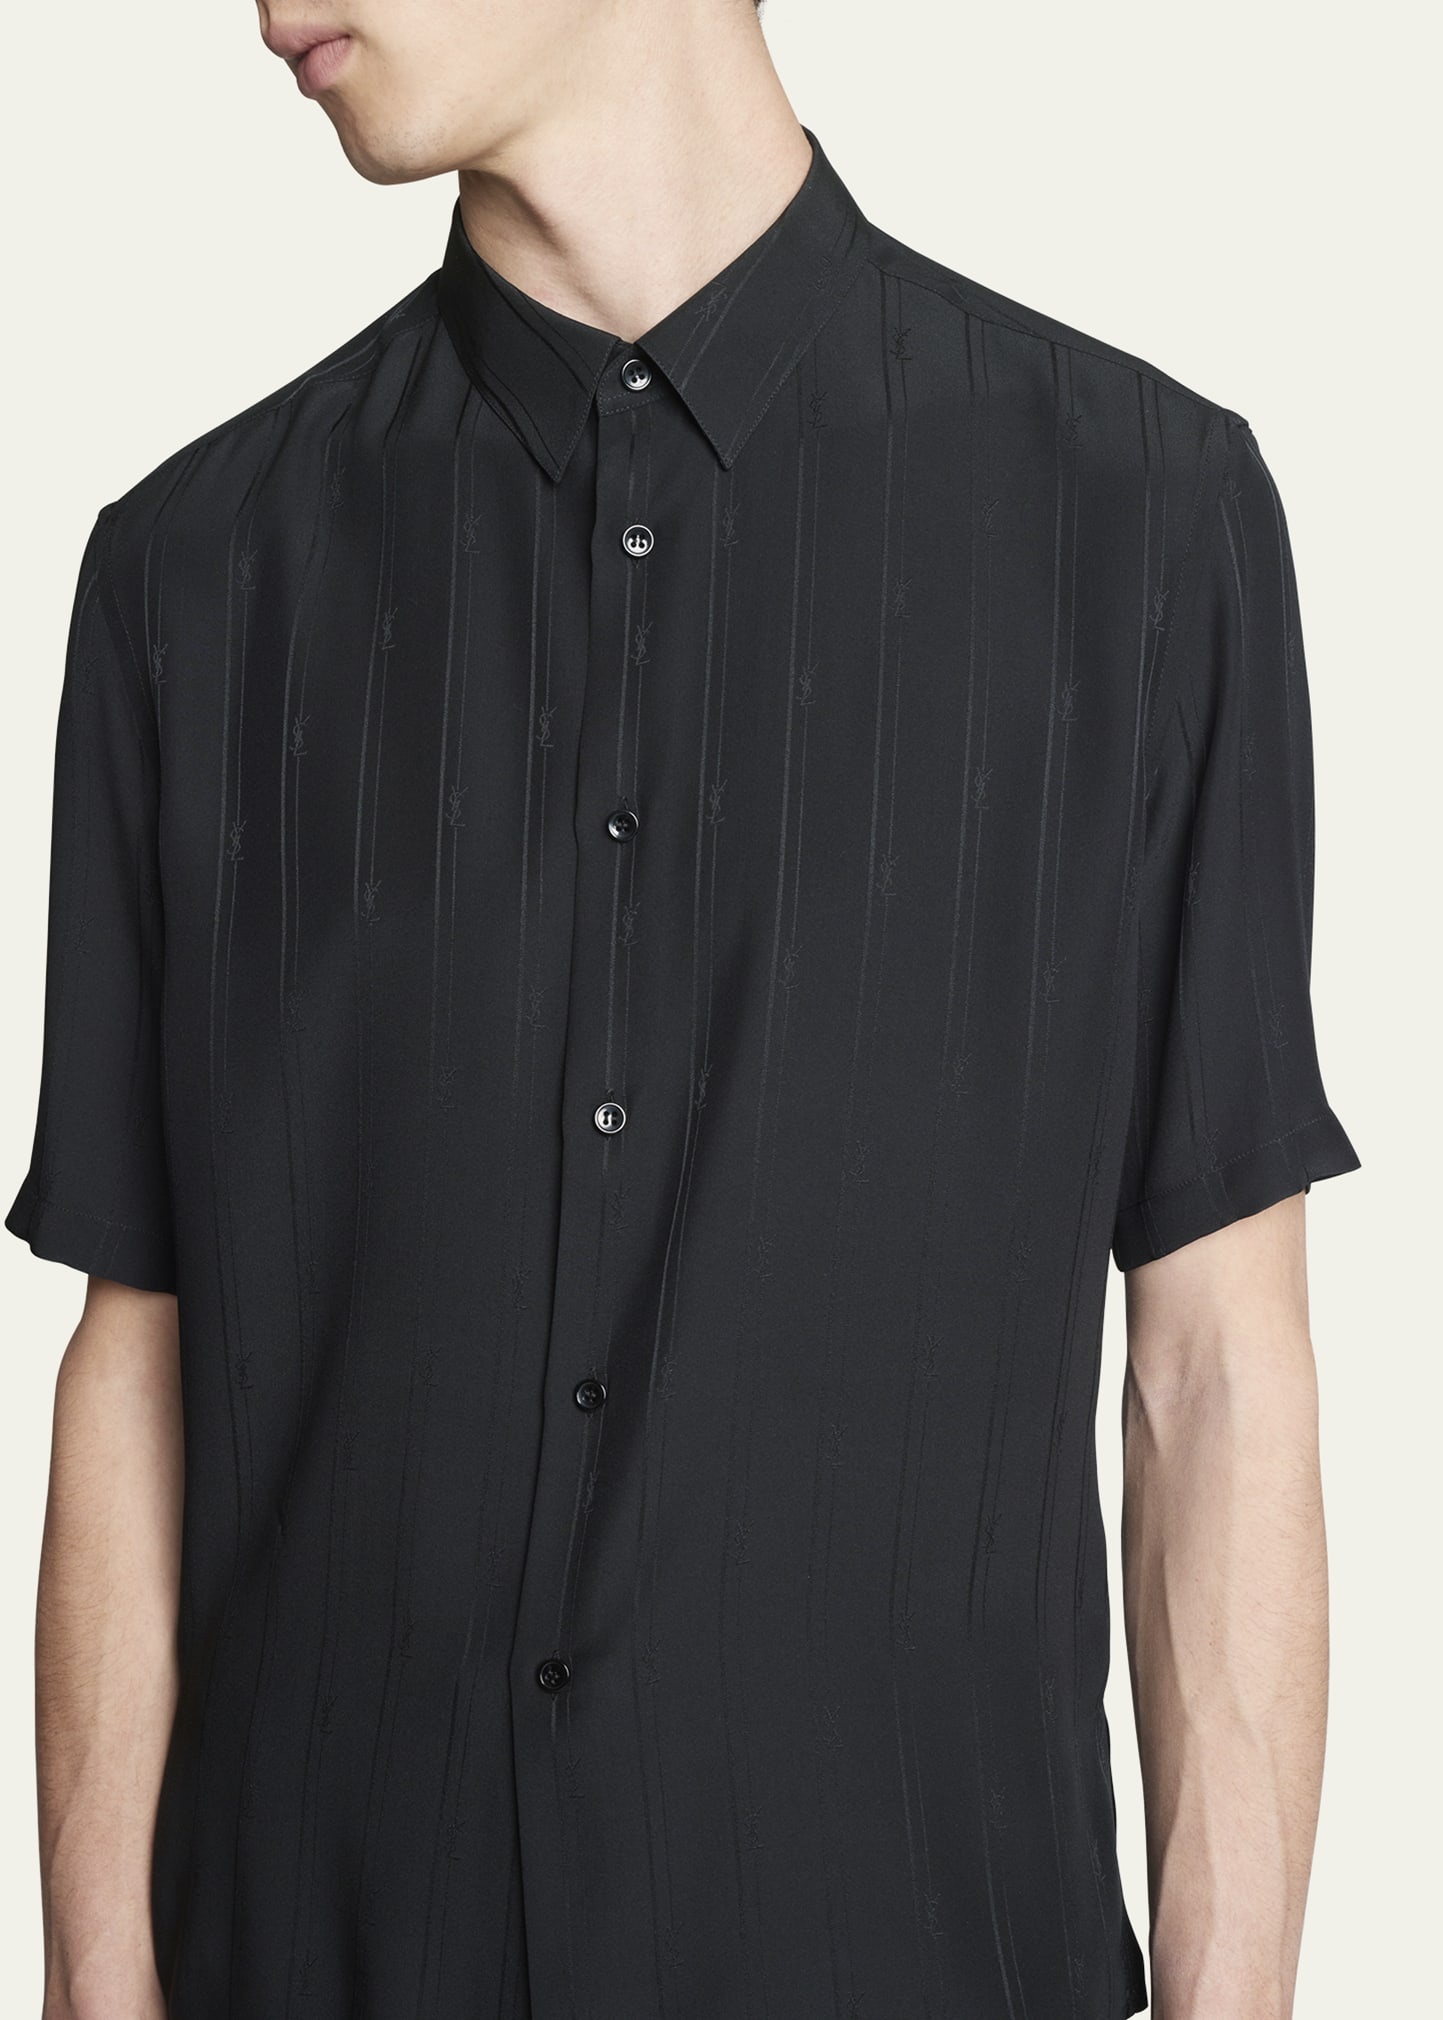 Men's YSL Tonal Striped Dress Shirt - 5